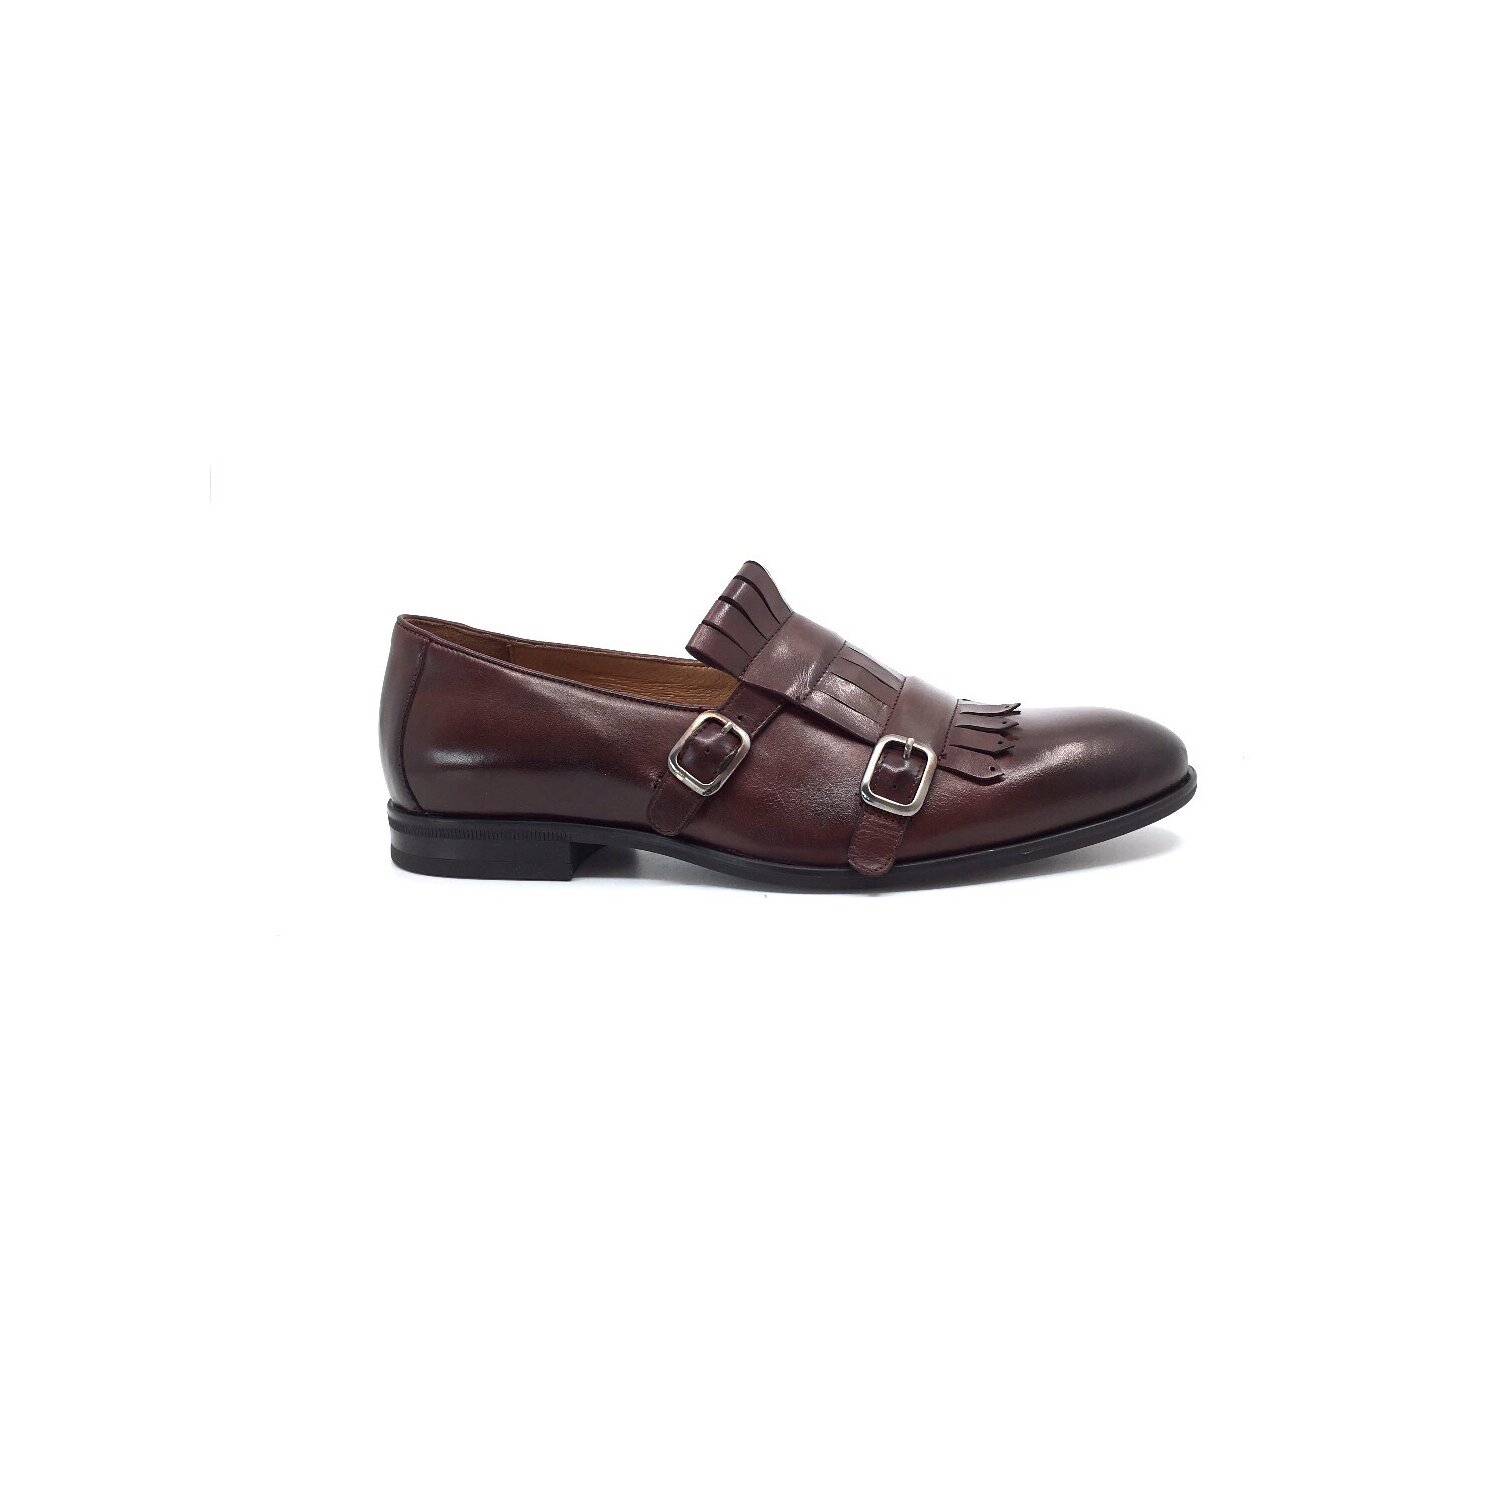 Pantofi eleganti barbati, cu franjuri din piele naturala, Leofex - 586 visiniu box